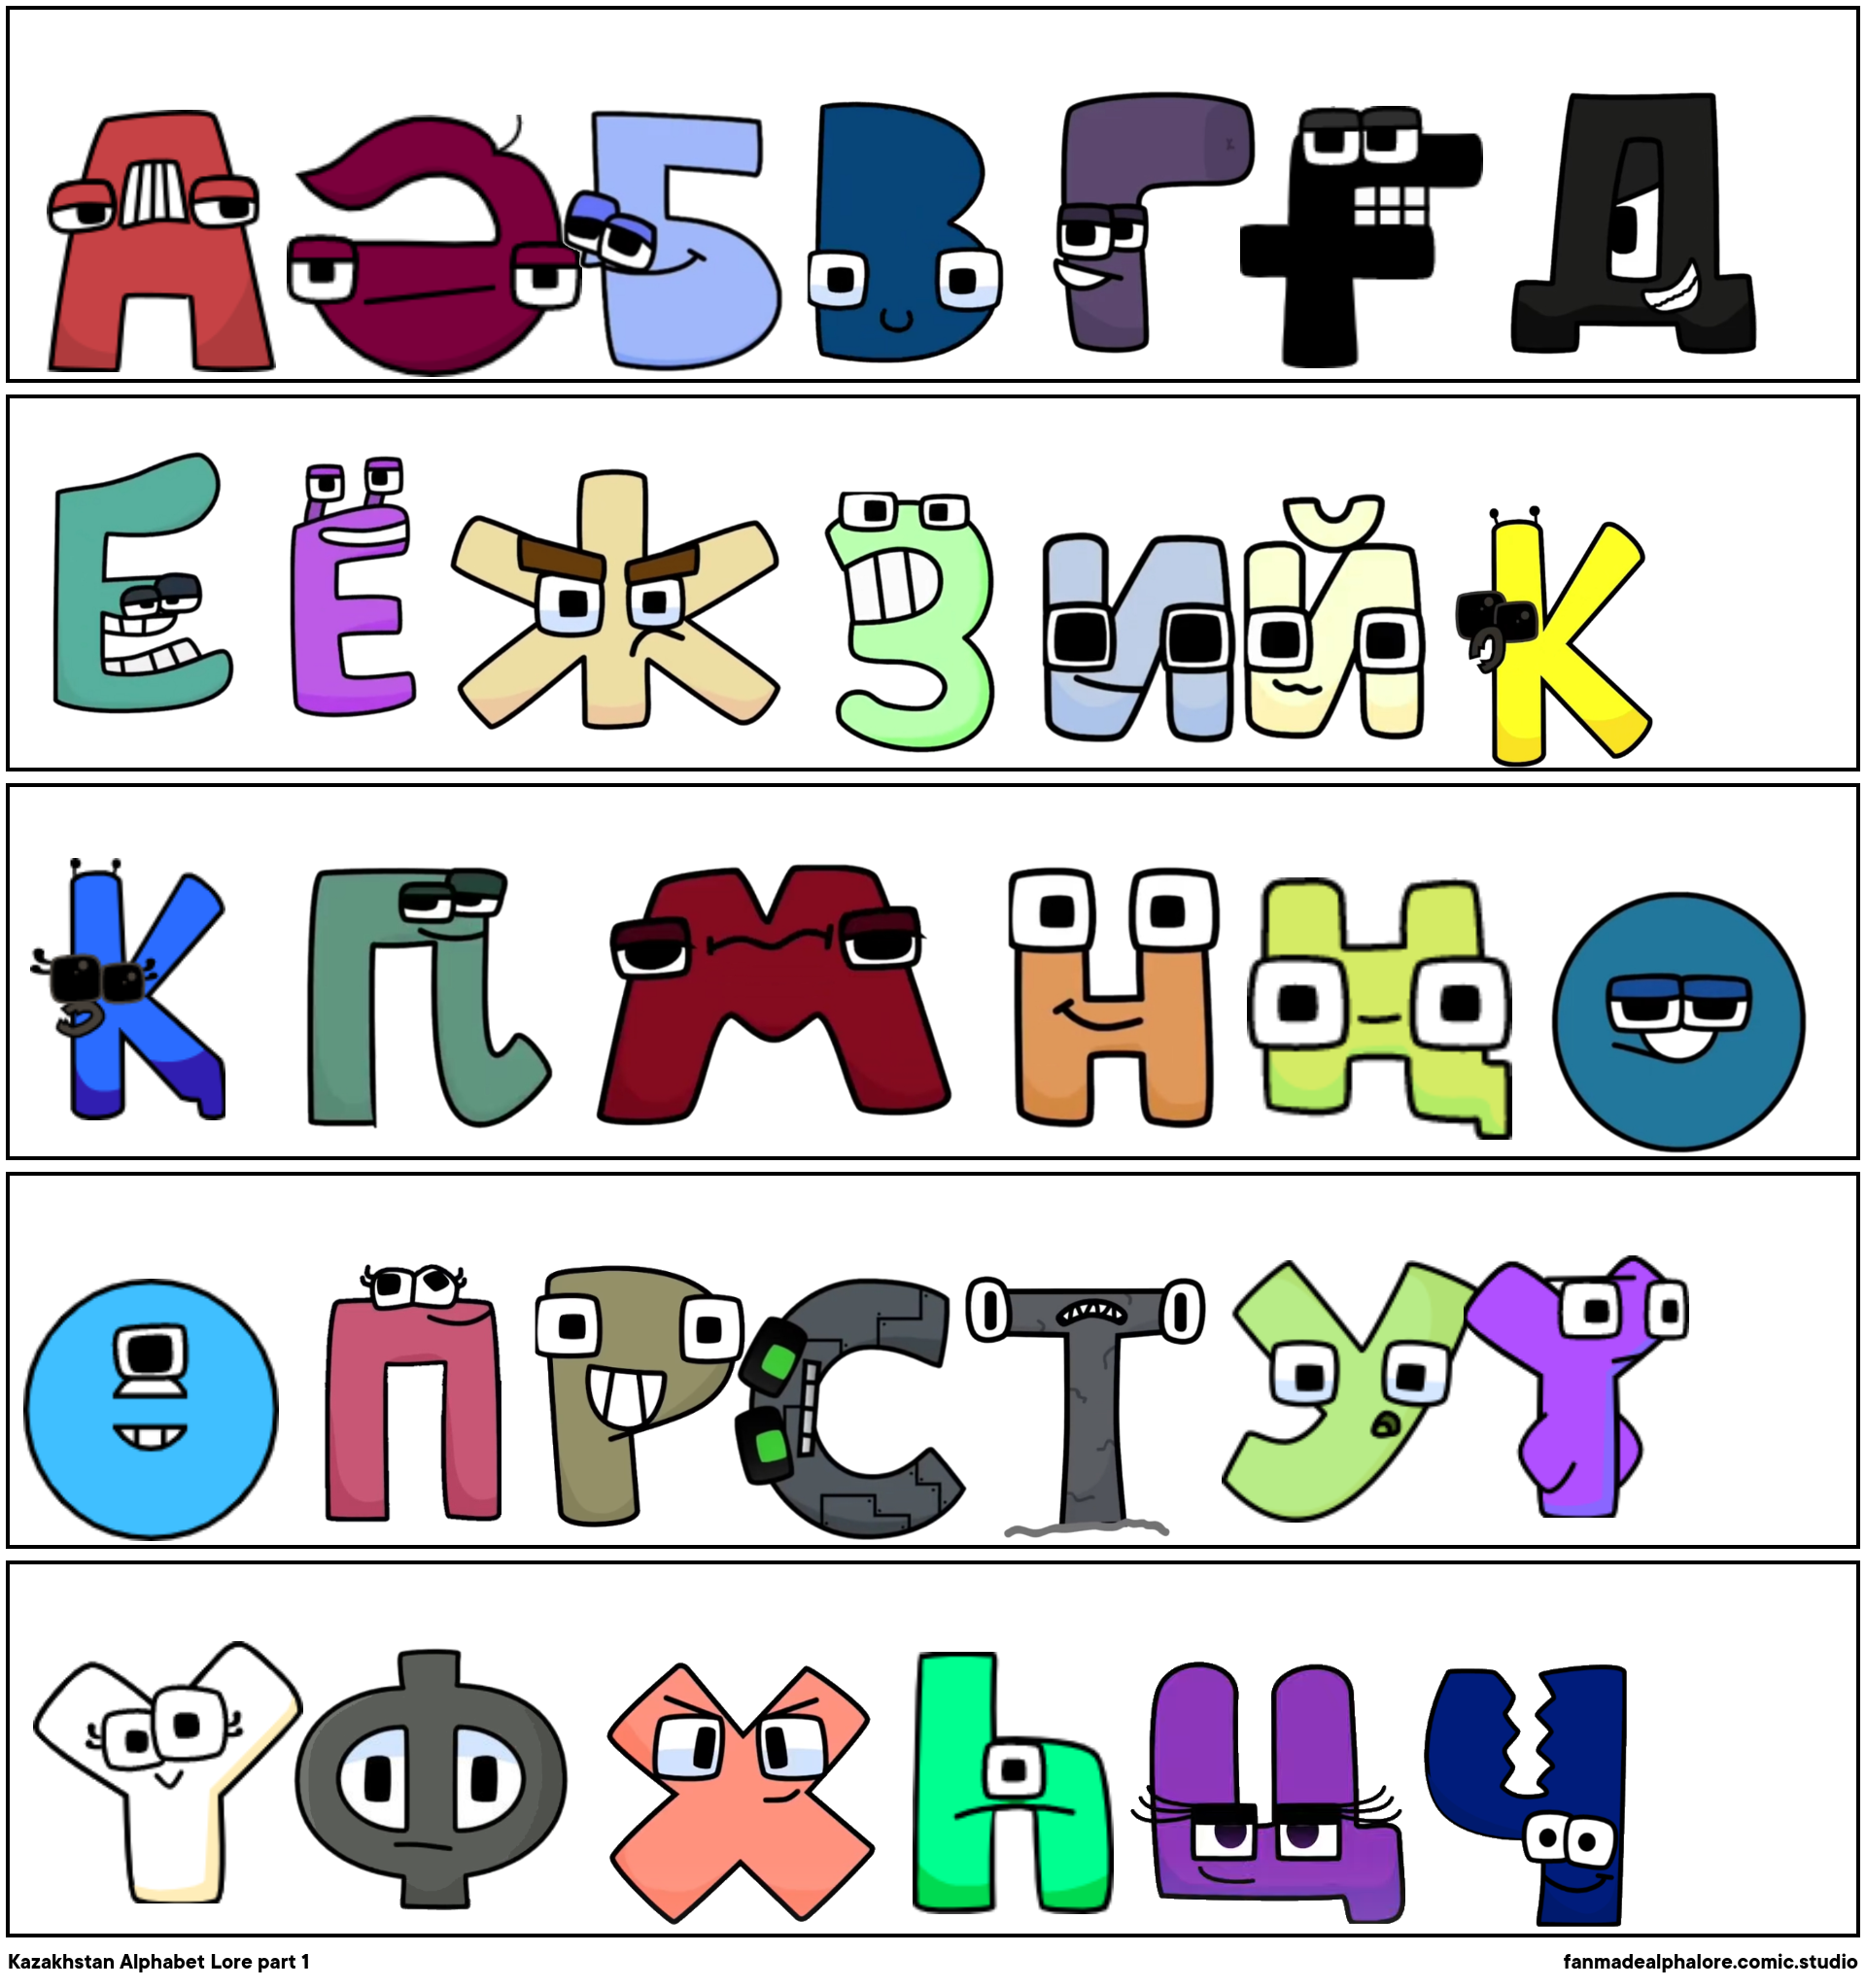 Kazakh Alphabet Lore И-Л - Comic Studio